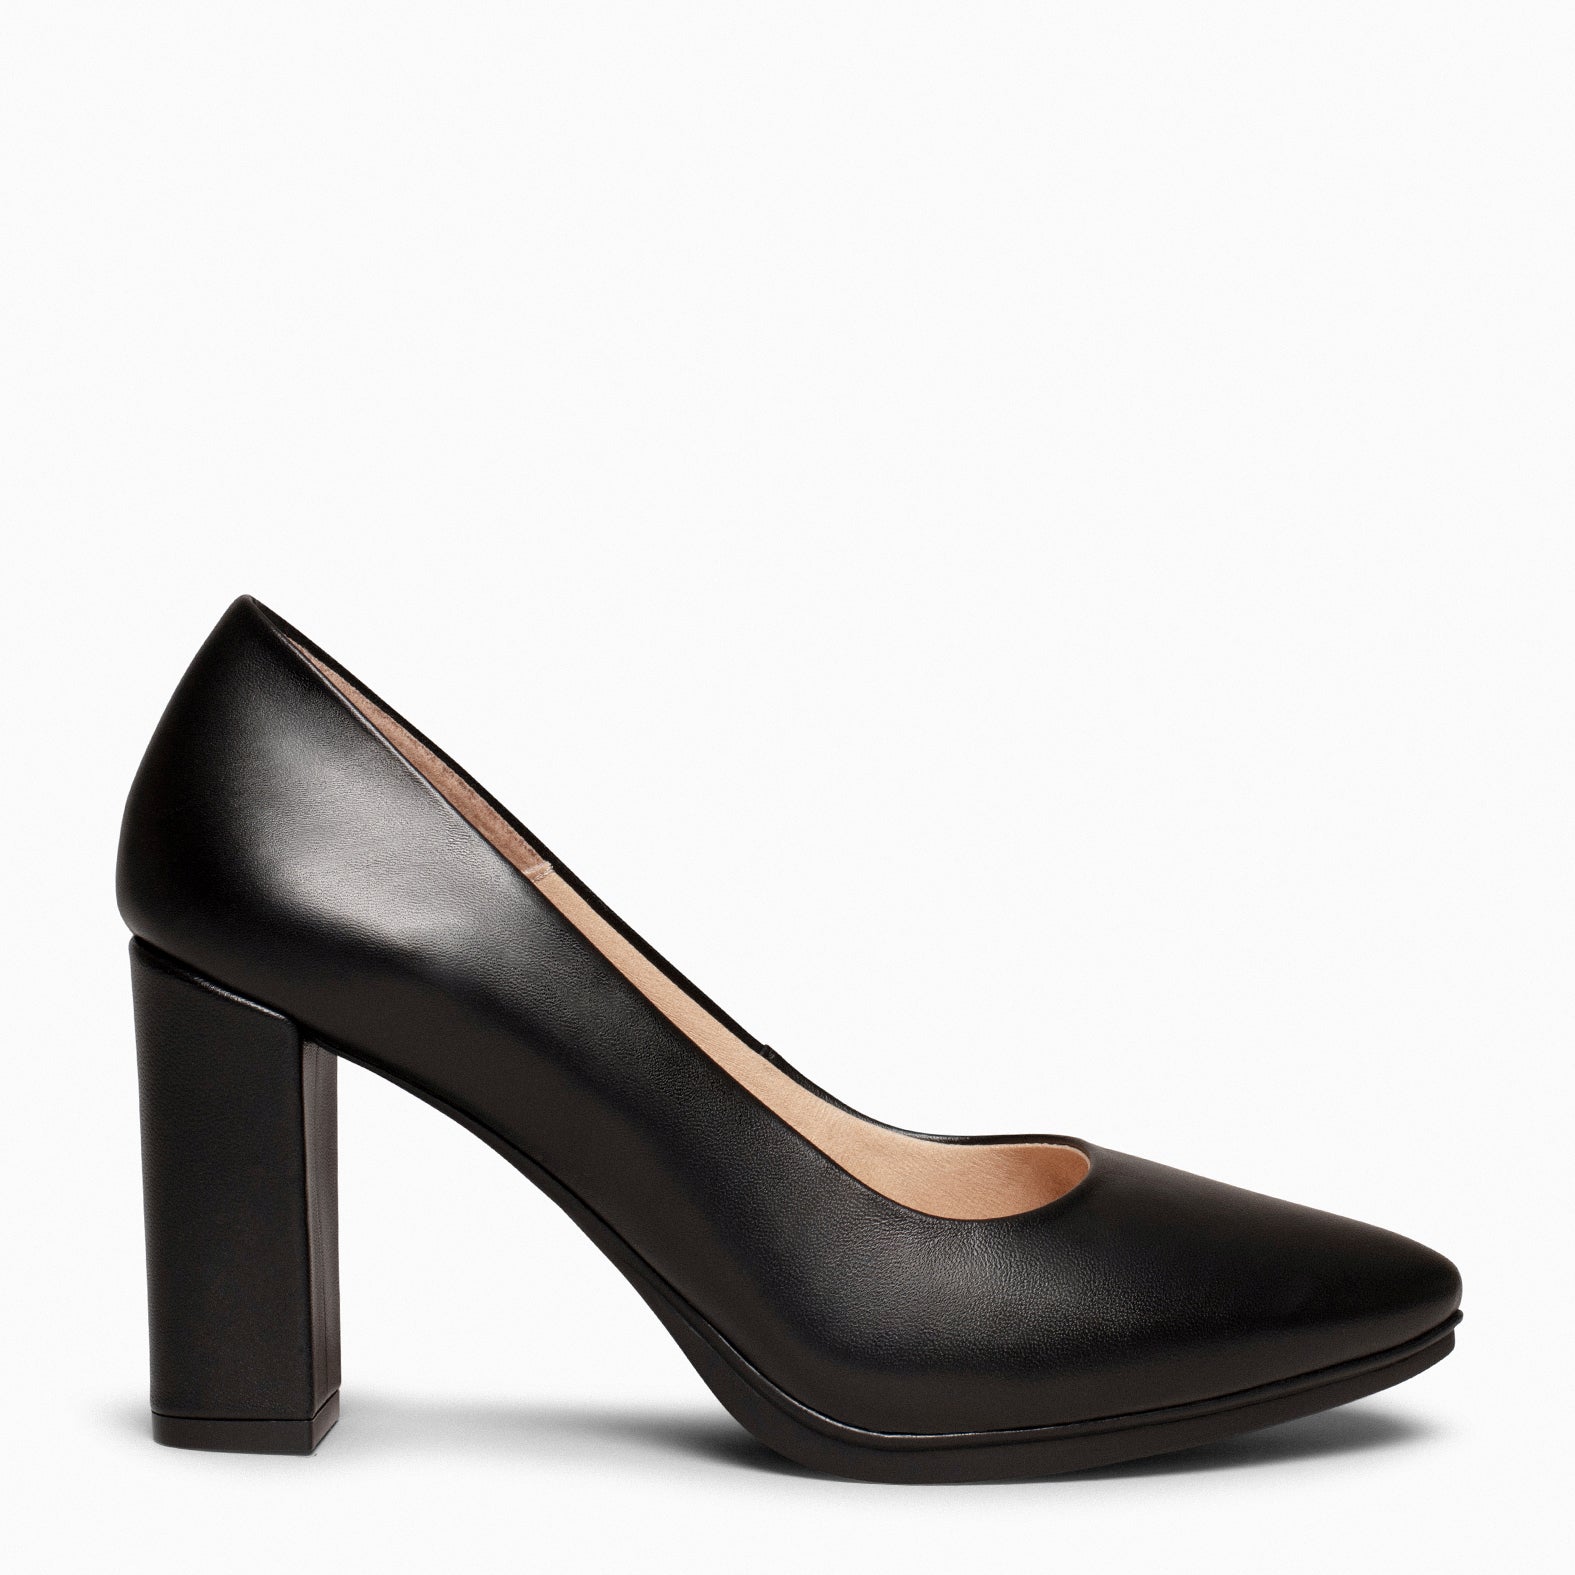 URBAN SALON –  BLACK nappa leather high heel